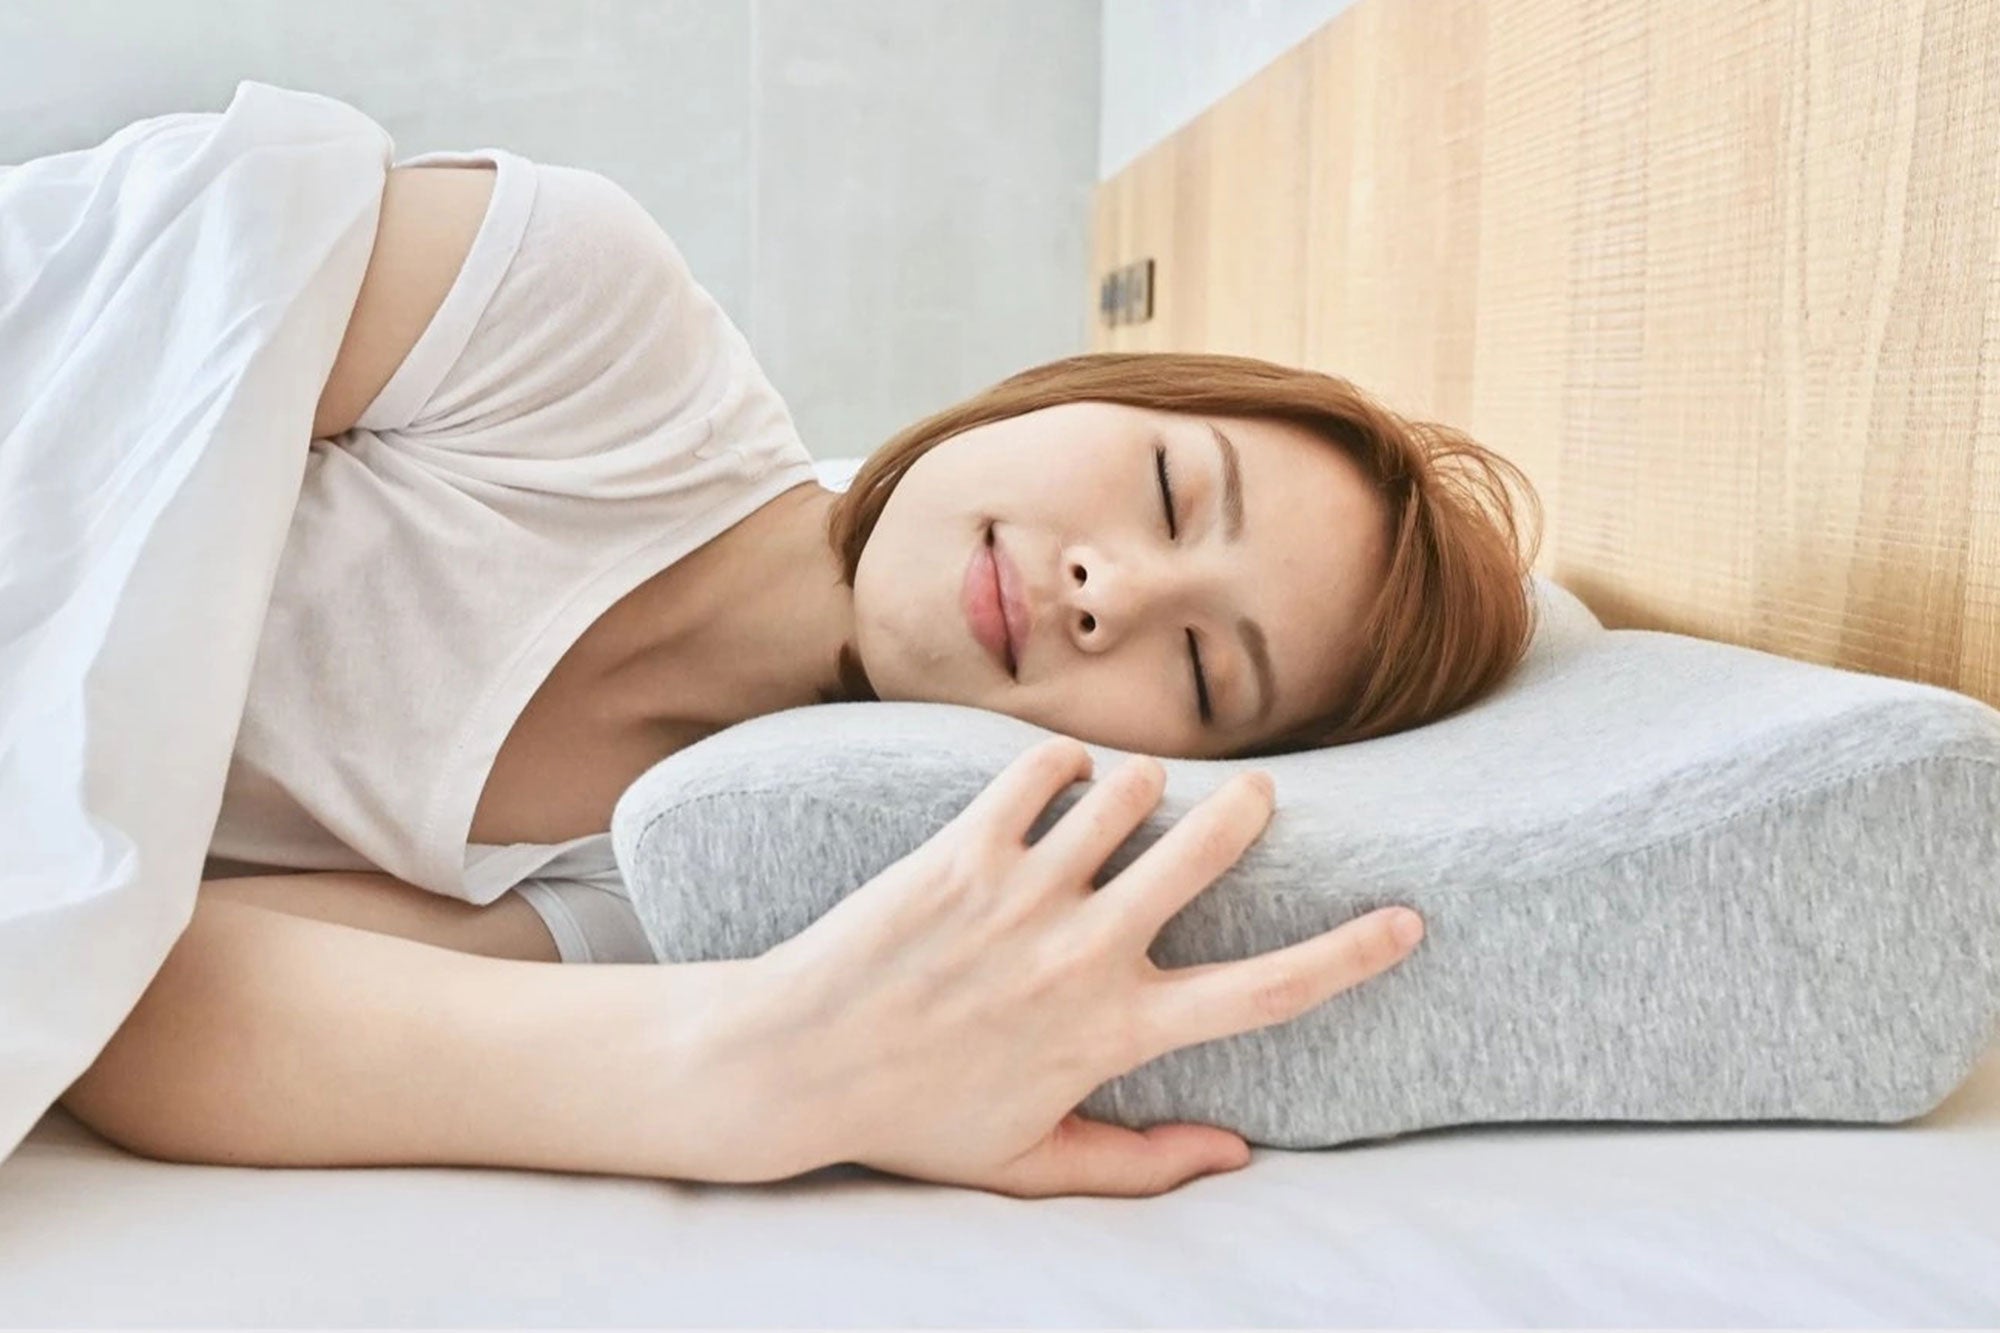 Lumbar Support Back Pillow for Sleeping, Neck Pillows for Sleeping